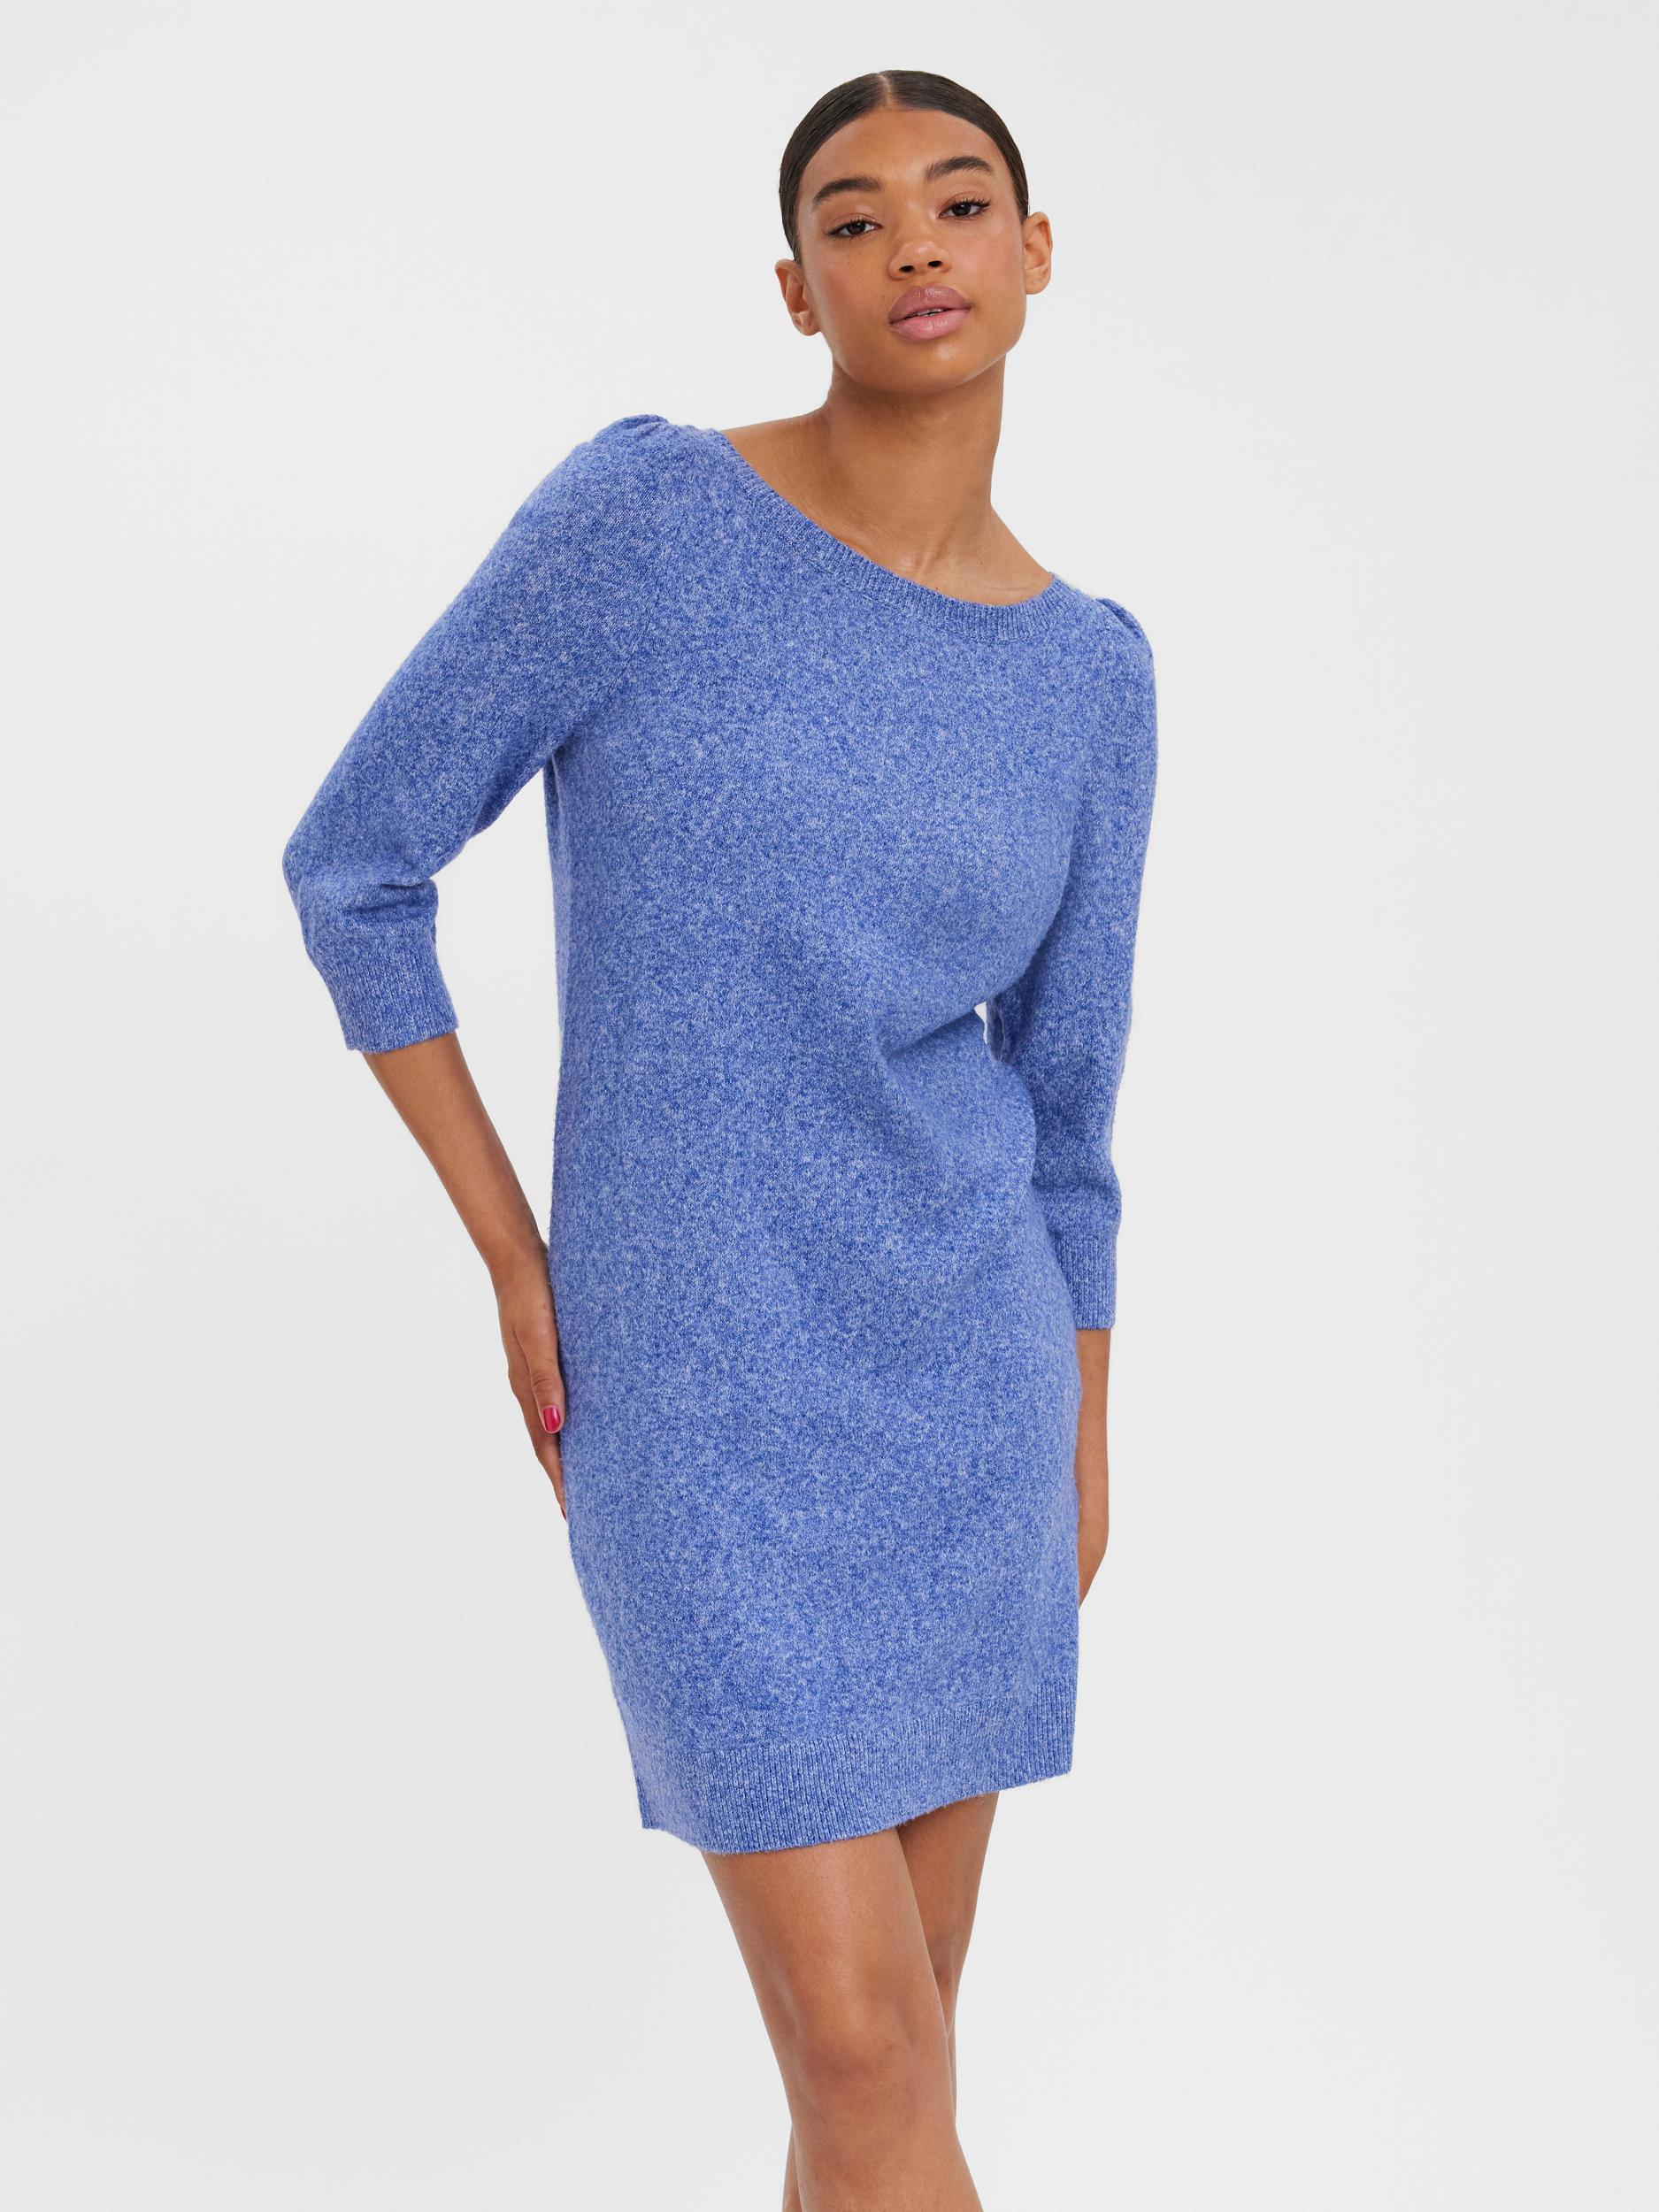 Doffy boat-neck knitted dress, SODALITE BLUE, large